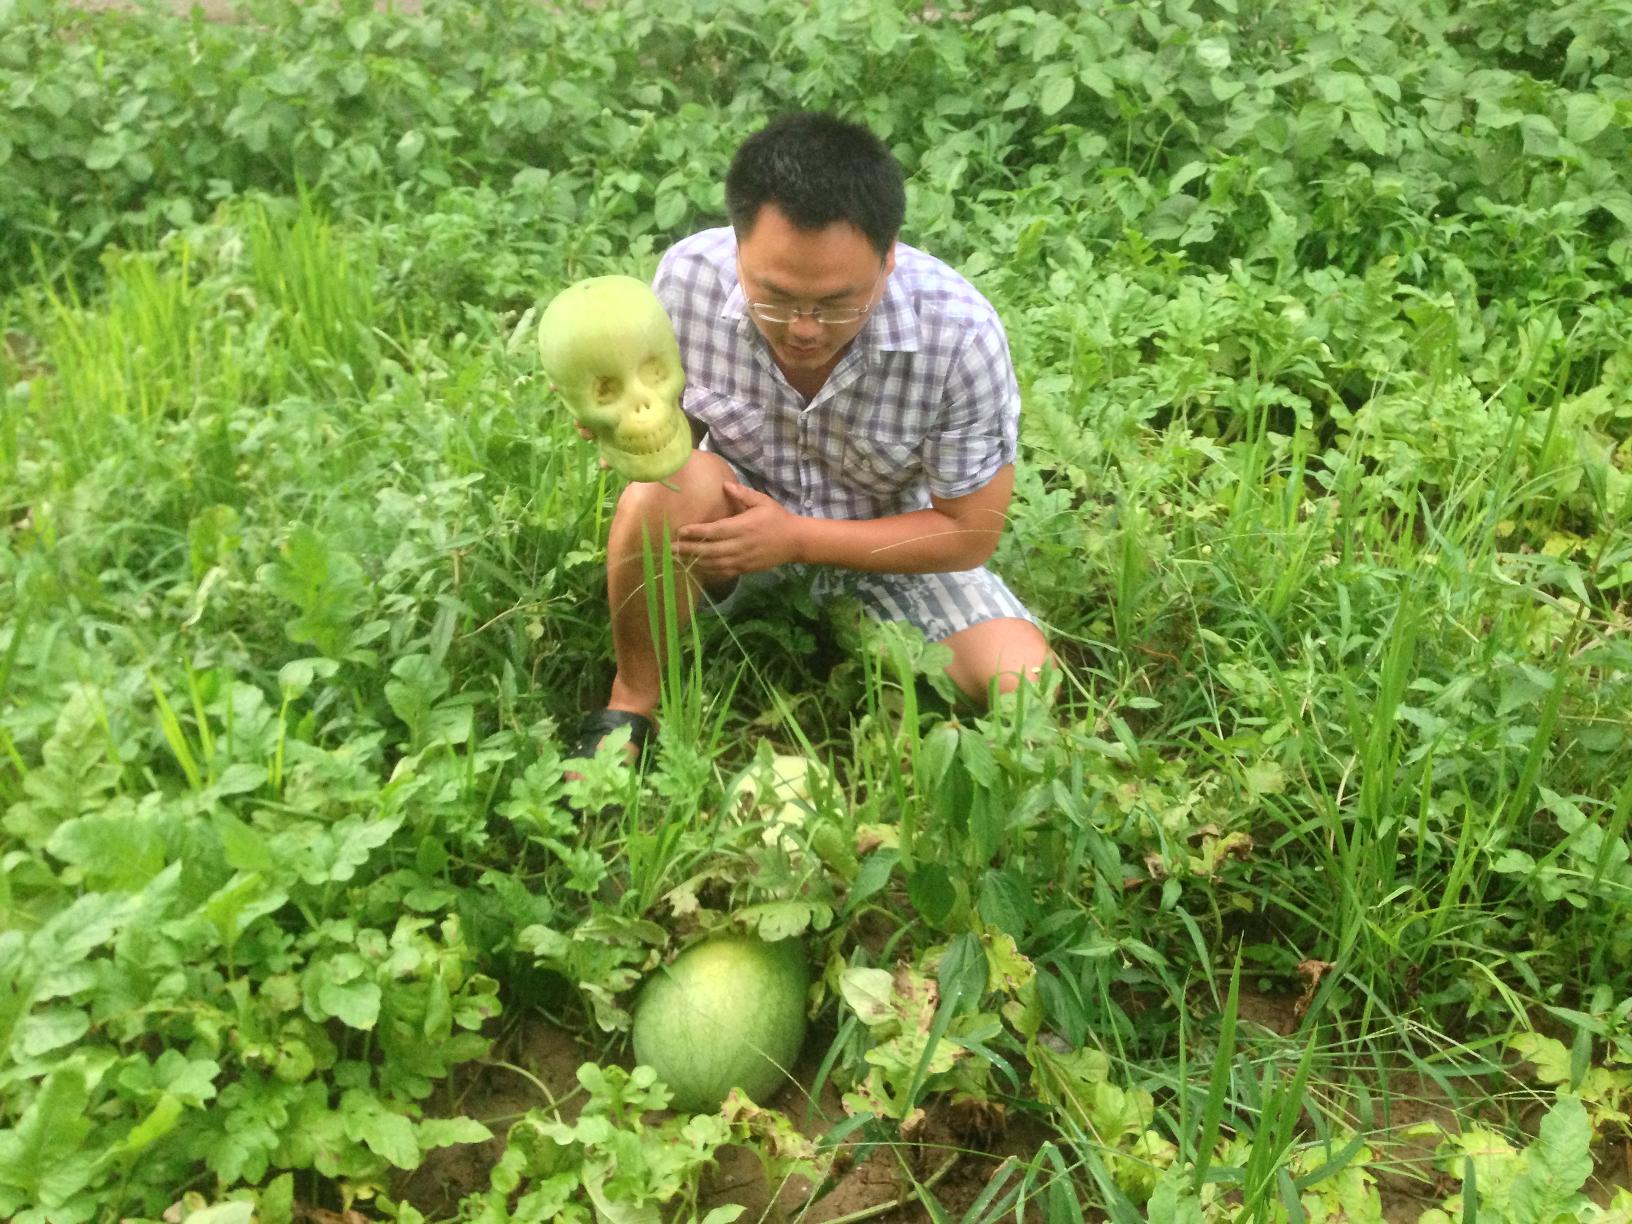 world first skull shape watermelon developed